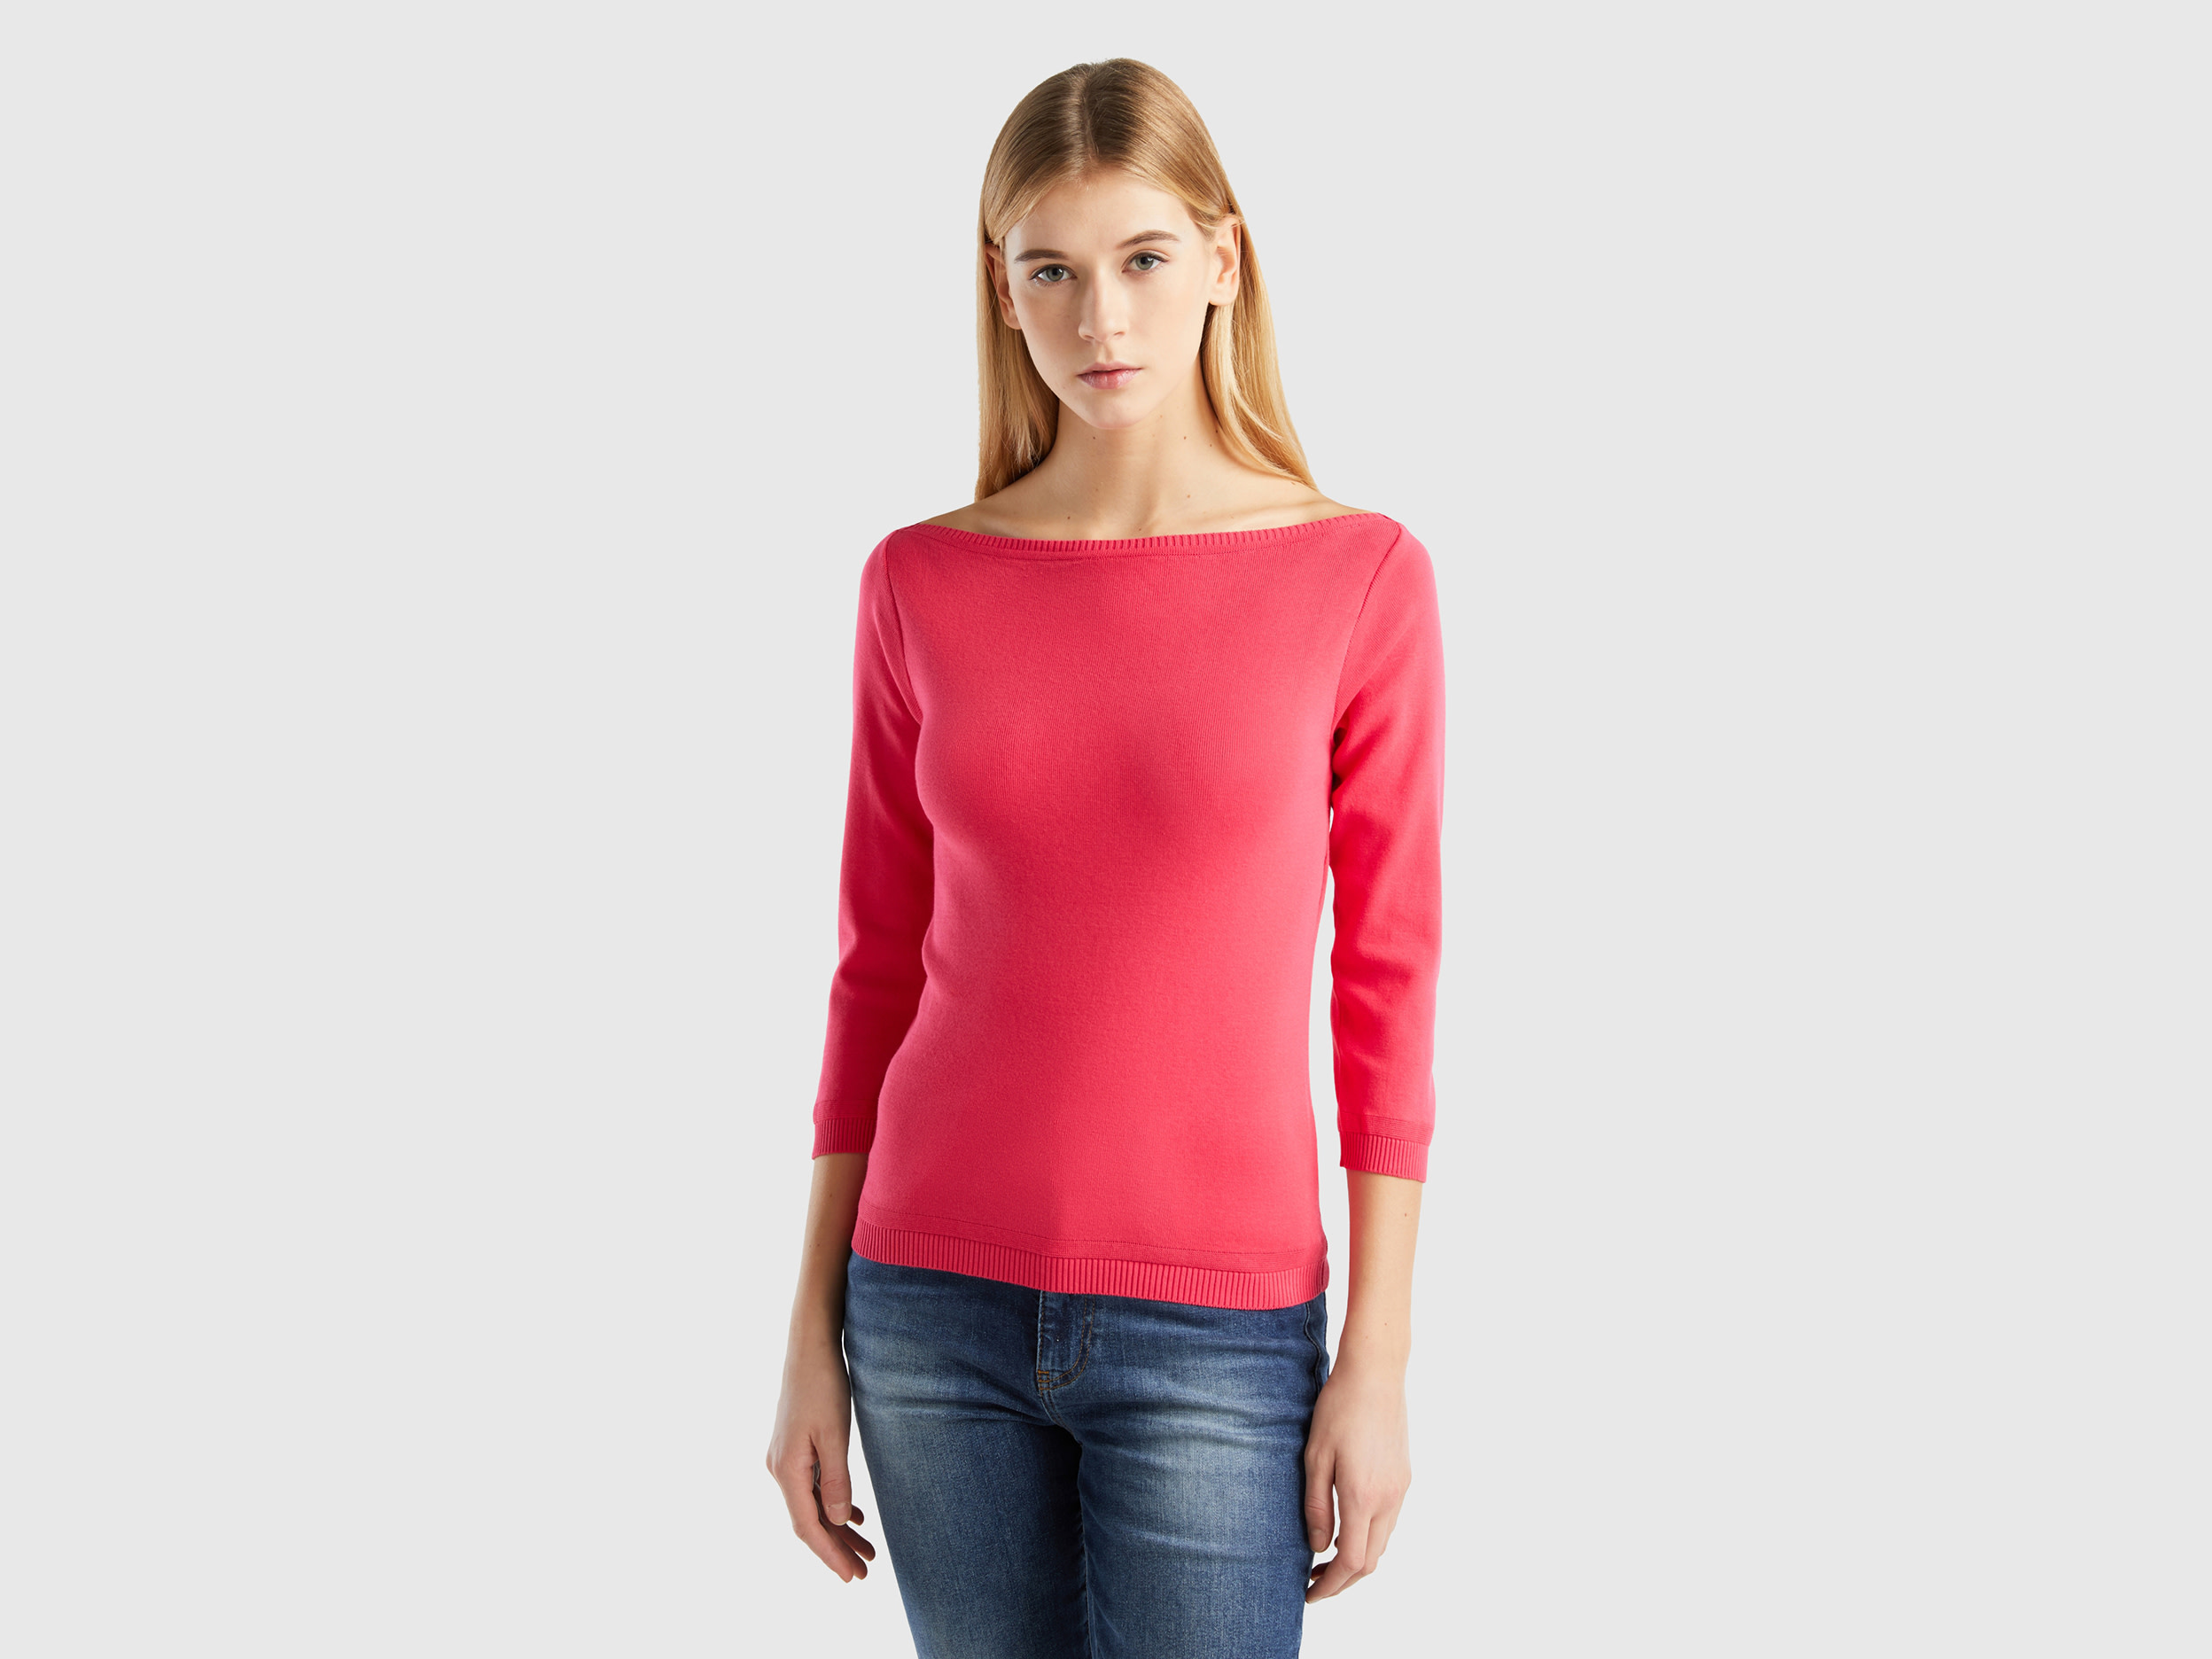 Benetton, 100% Cotton Boat Neck Sweater, size S, Fuchsia, Women